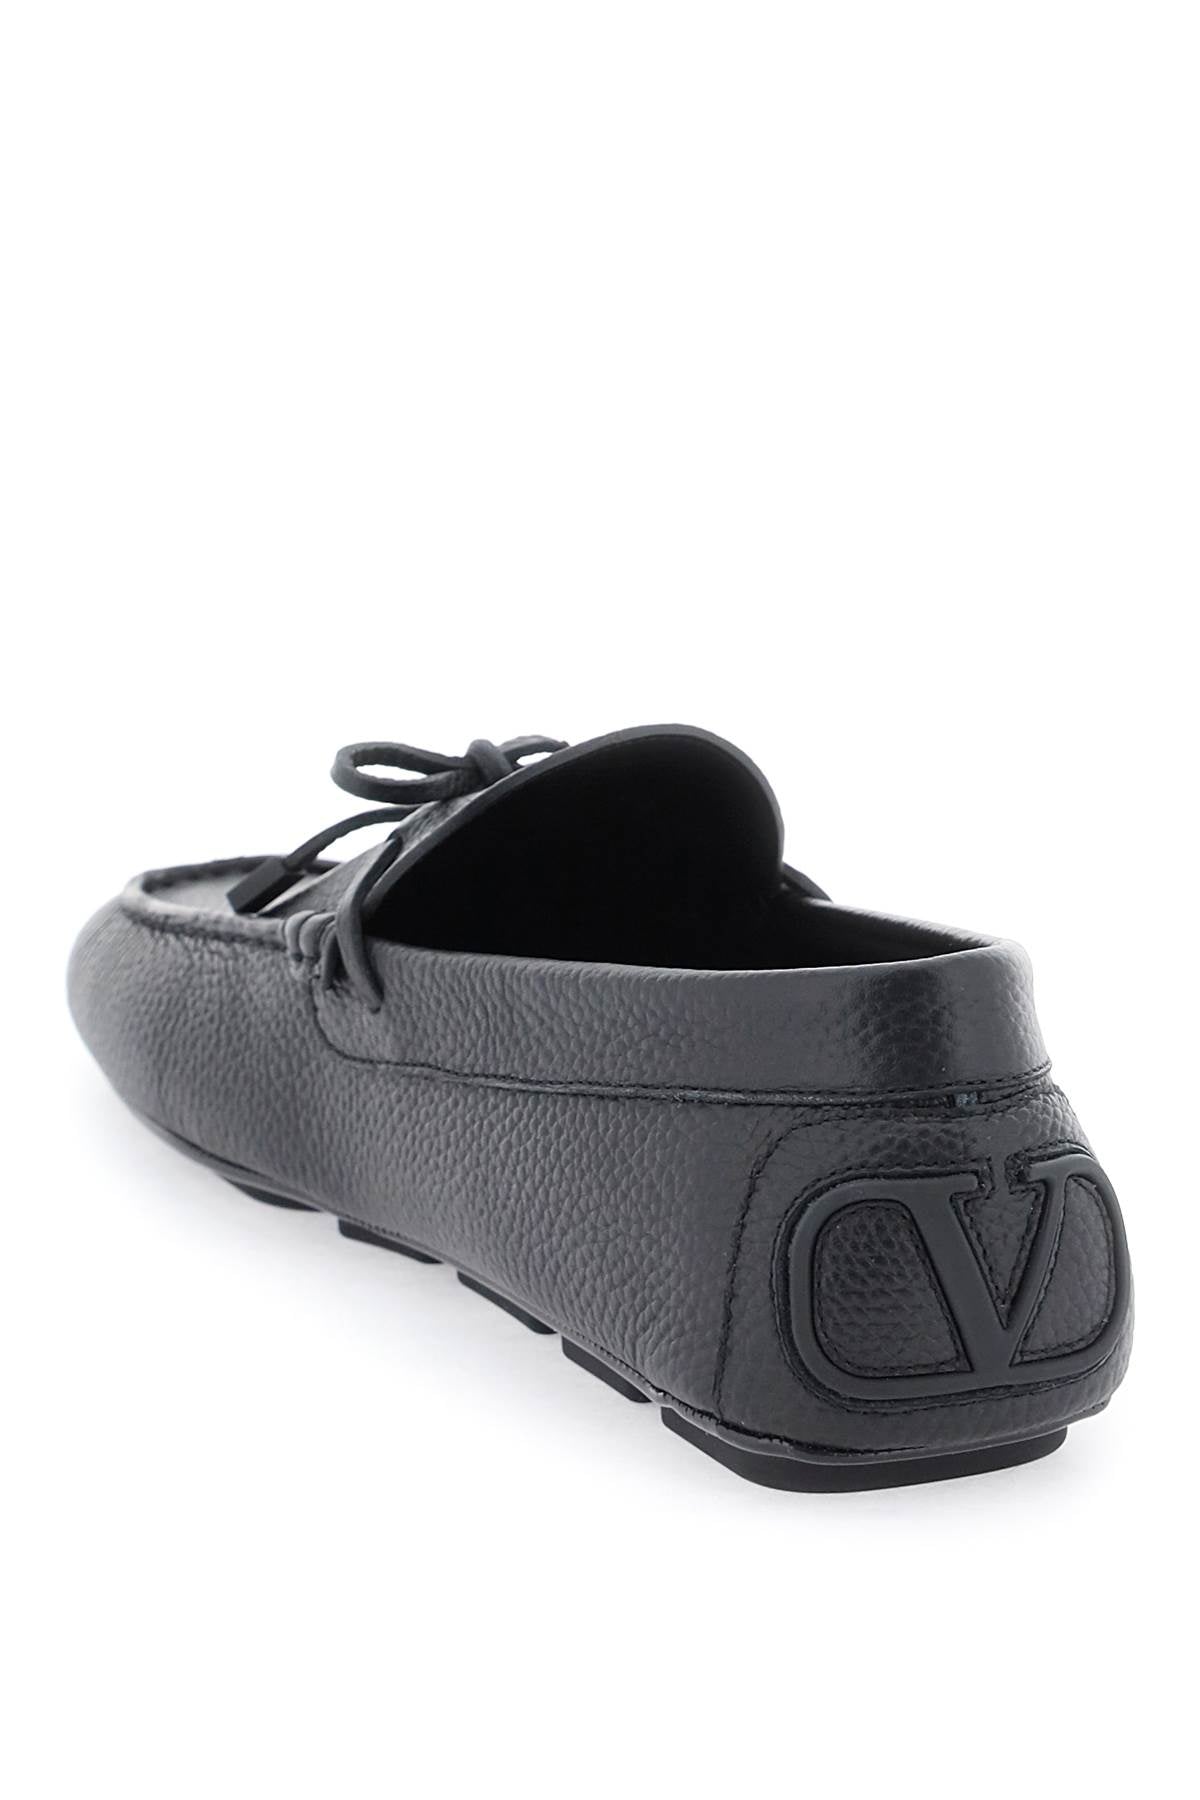 Valentino GARAVANI Valentino garavani leather loafers with bow